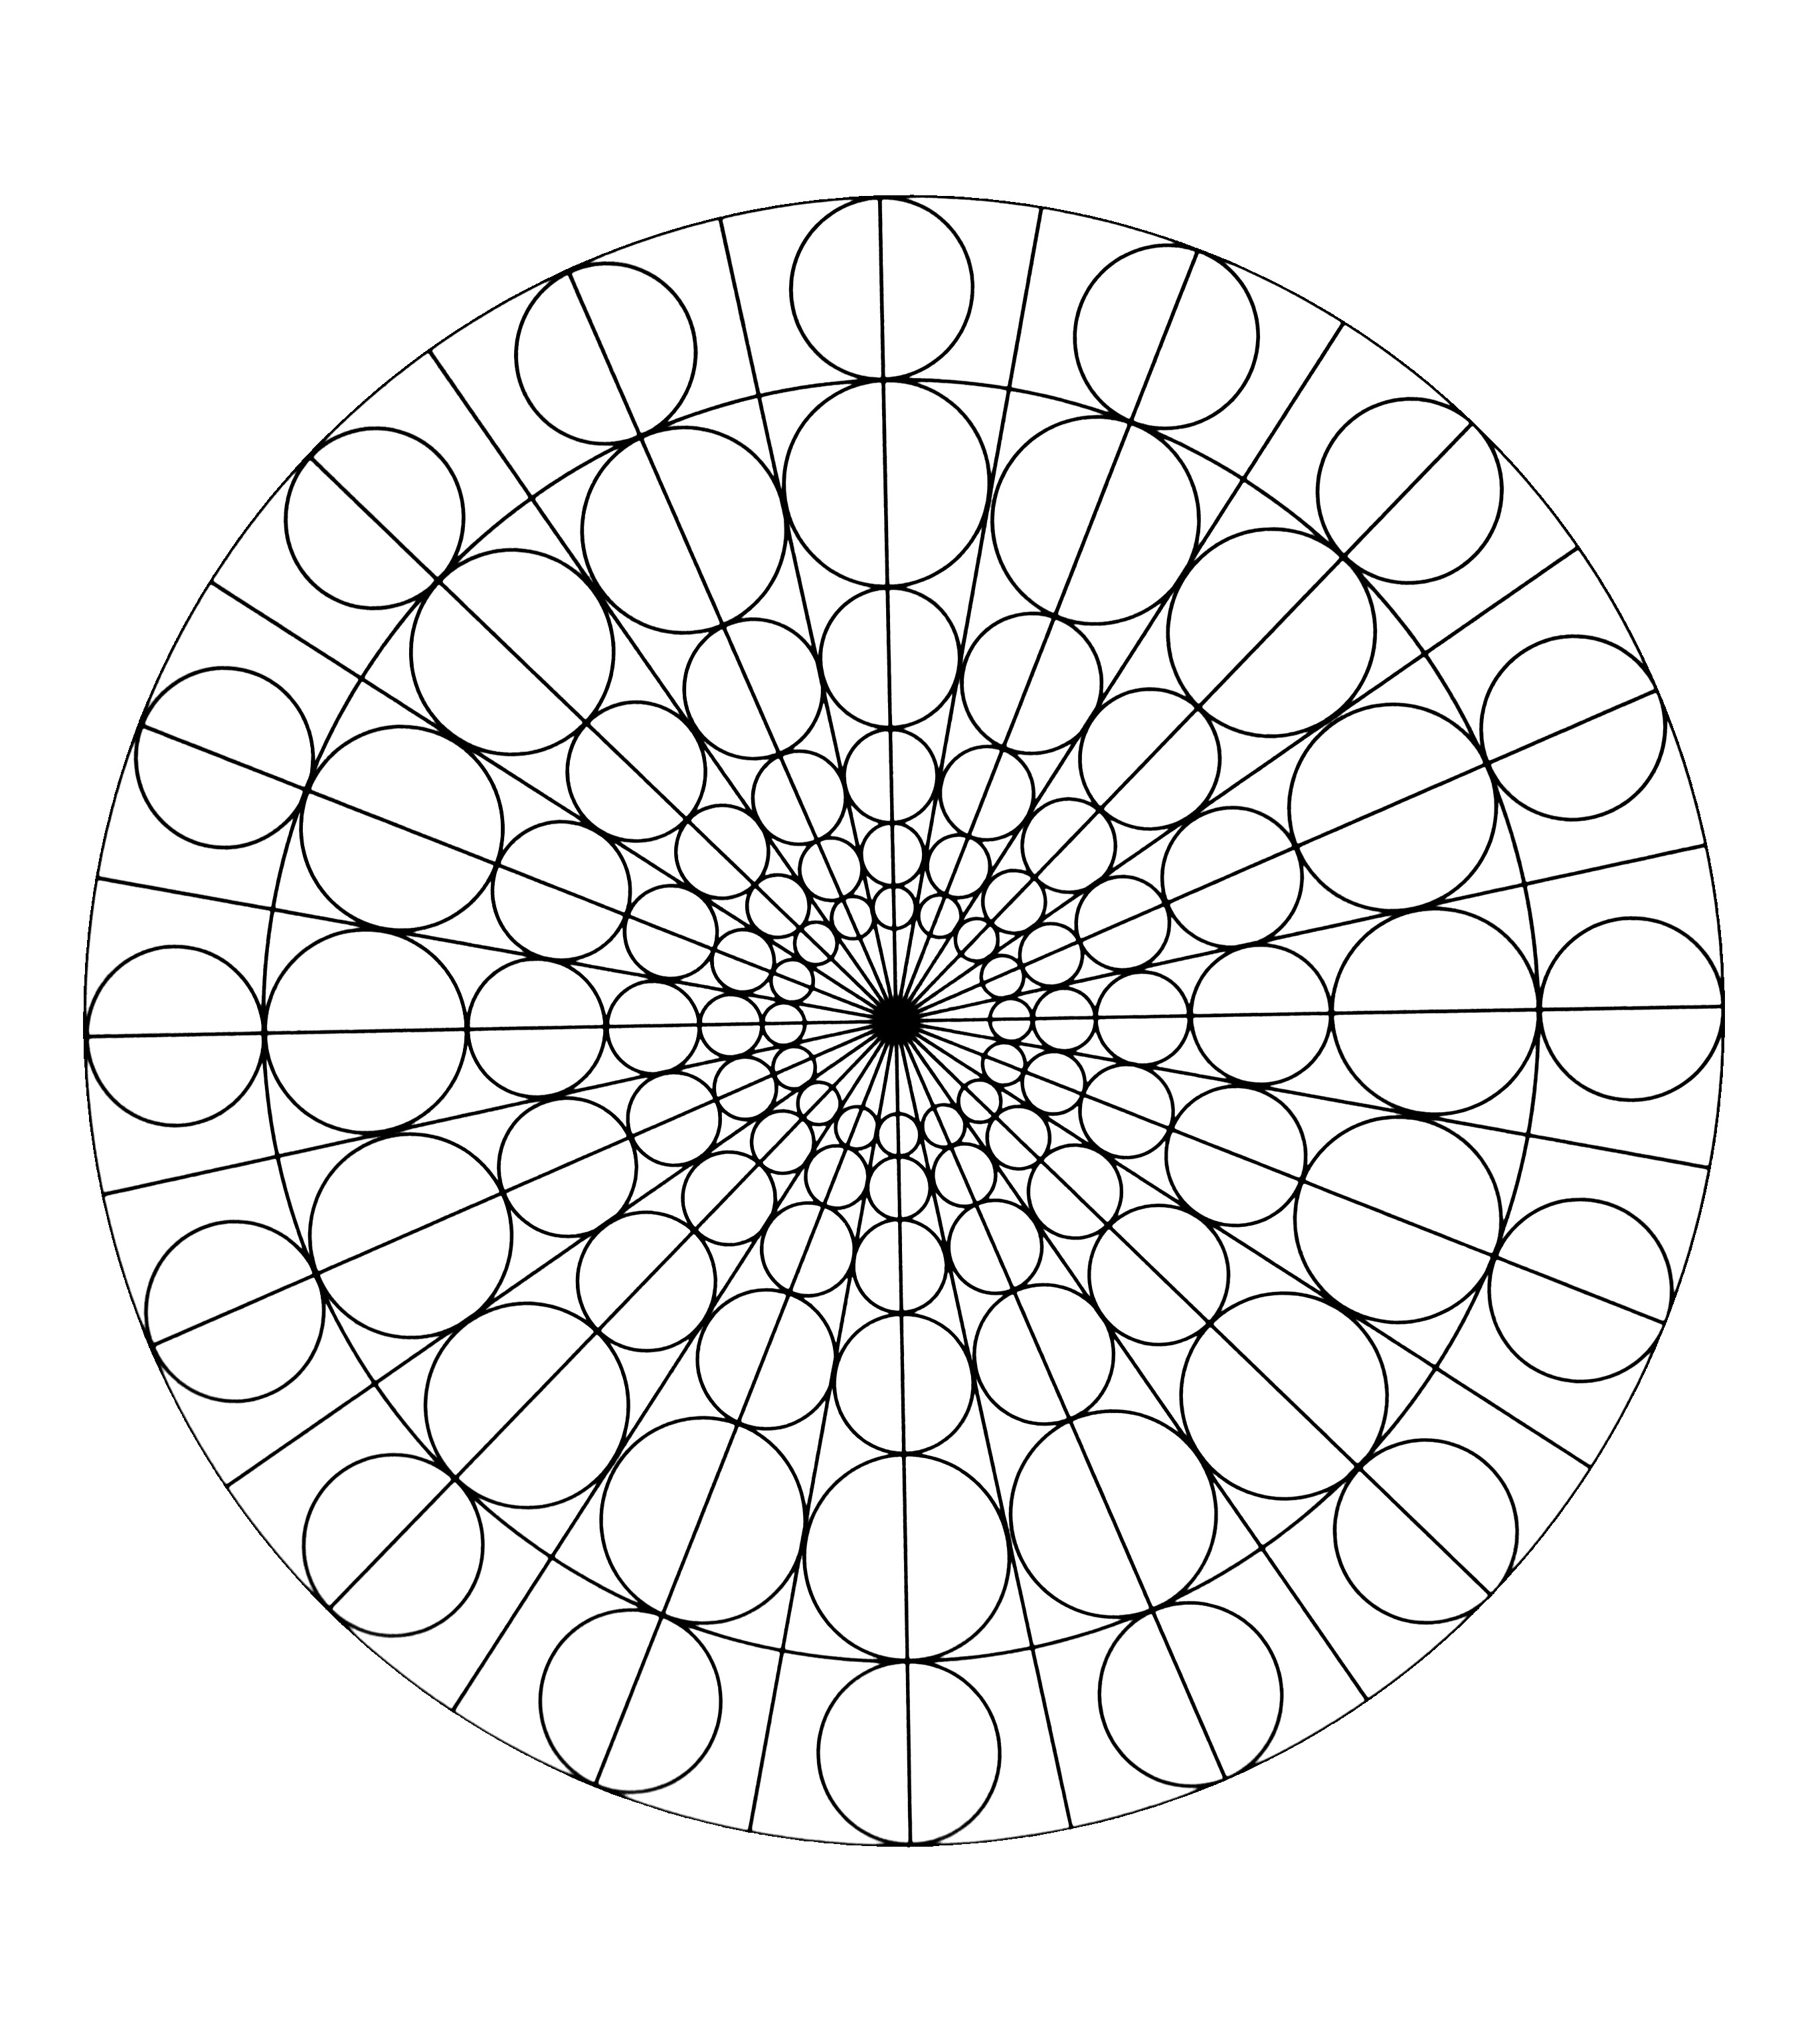 Mandala to color patterns geometric - 8